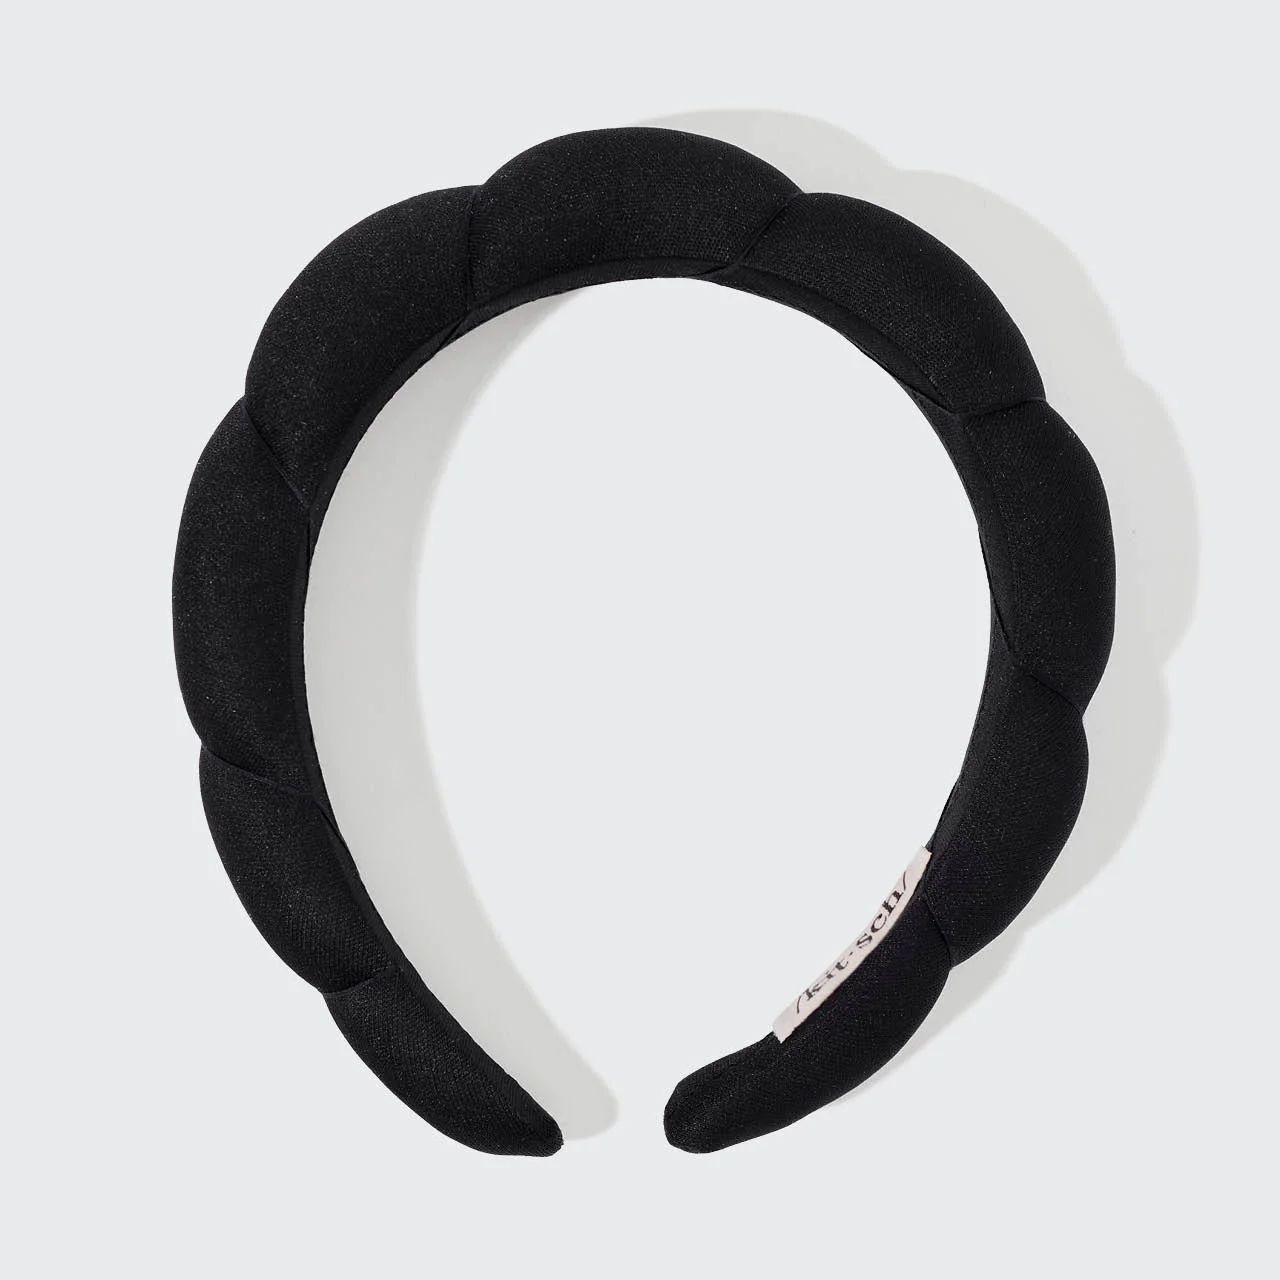 Recycled Fabric Cloud Headband 1pc - Black | Kitsch